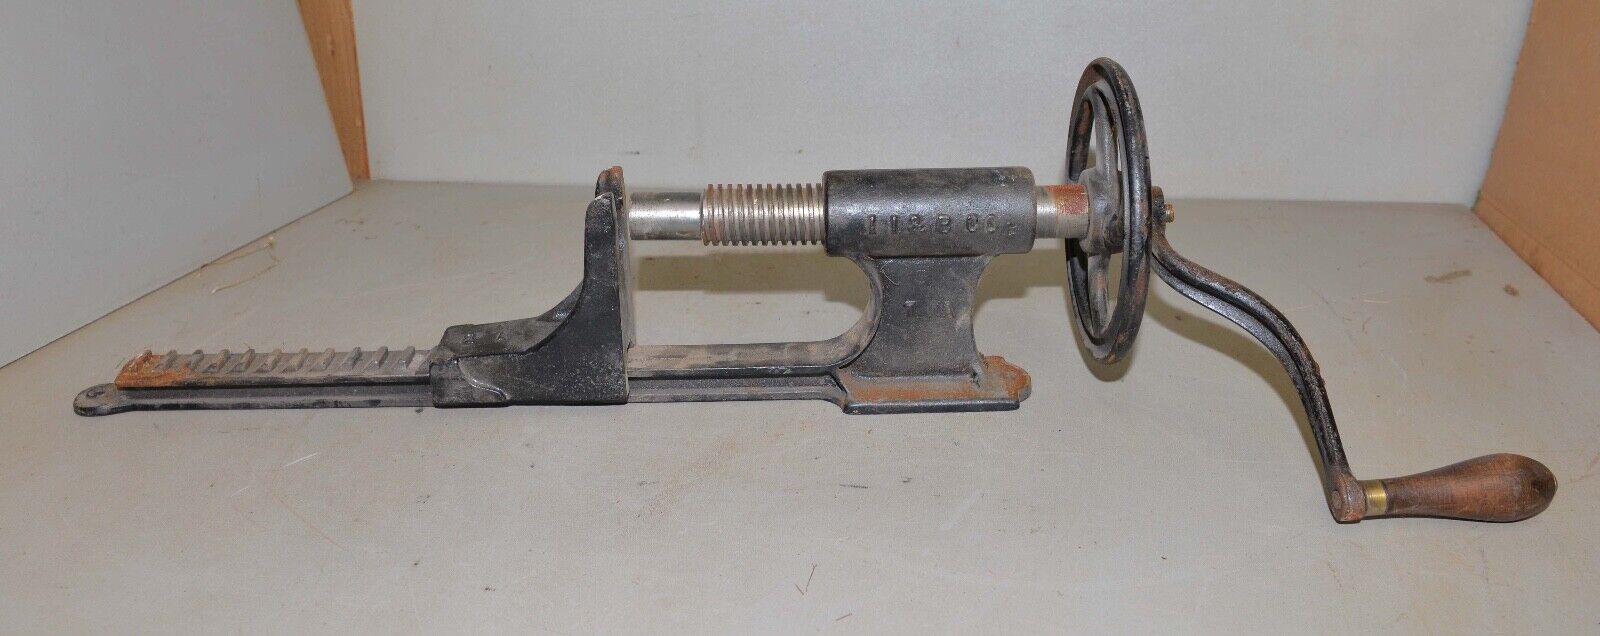 Rare L L & B Co cast iron blacksmith wall drill press collectible metal tool